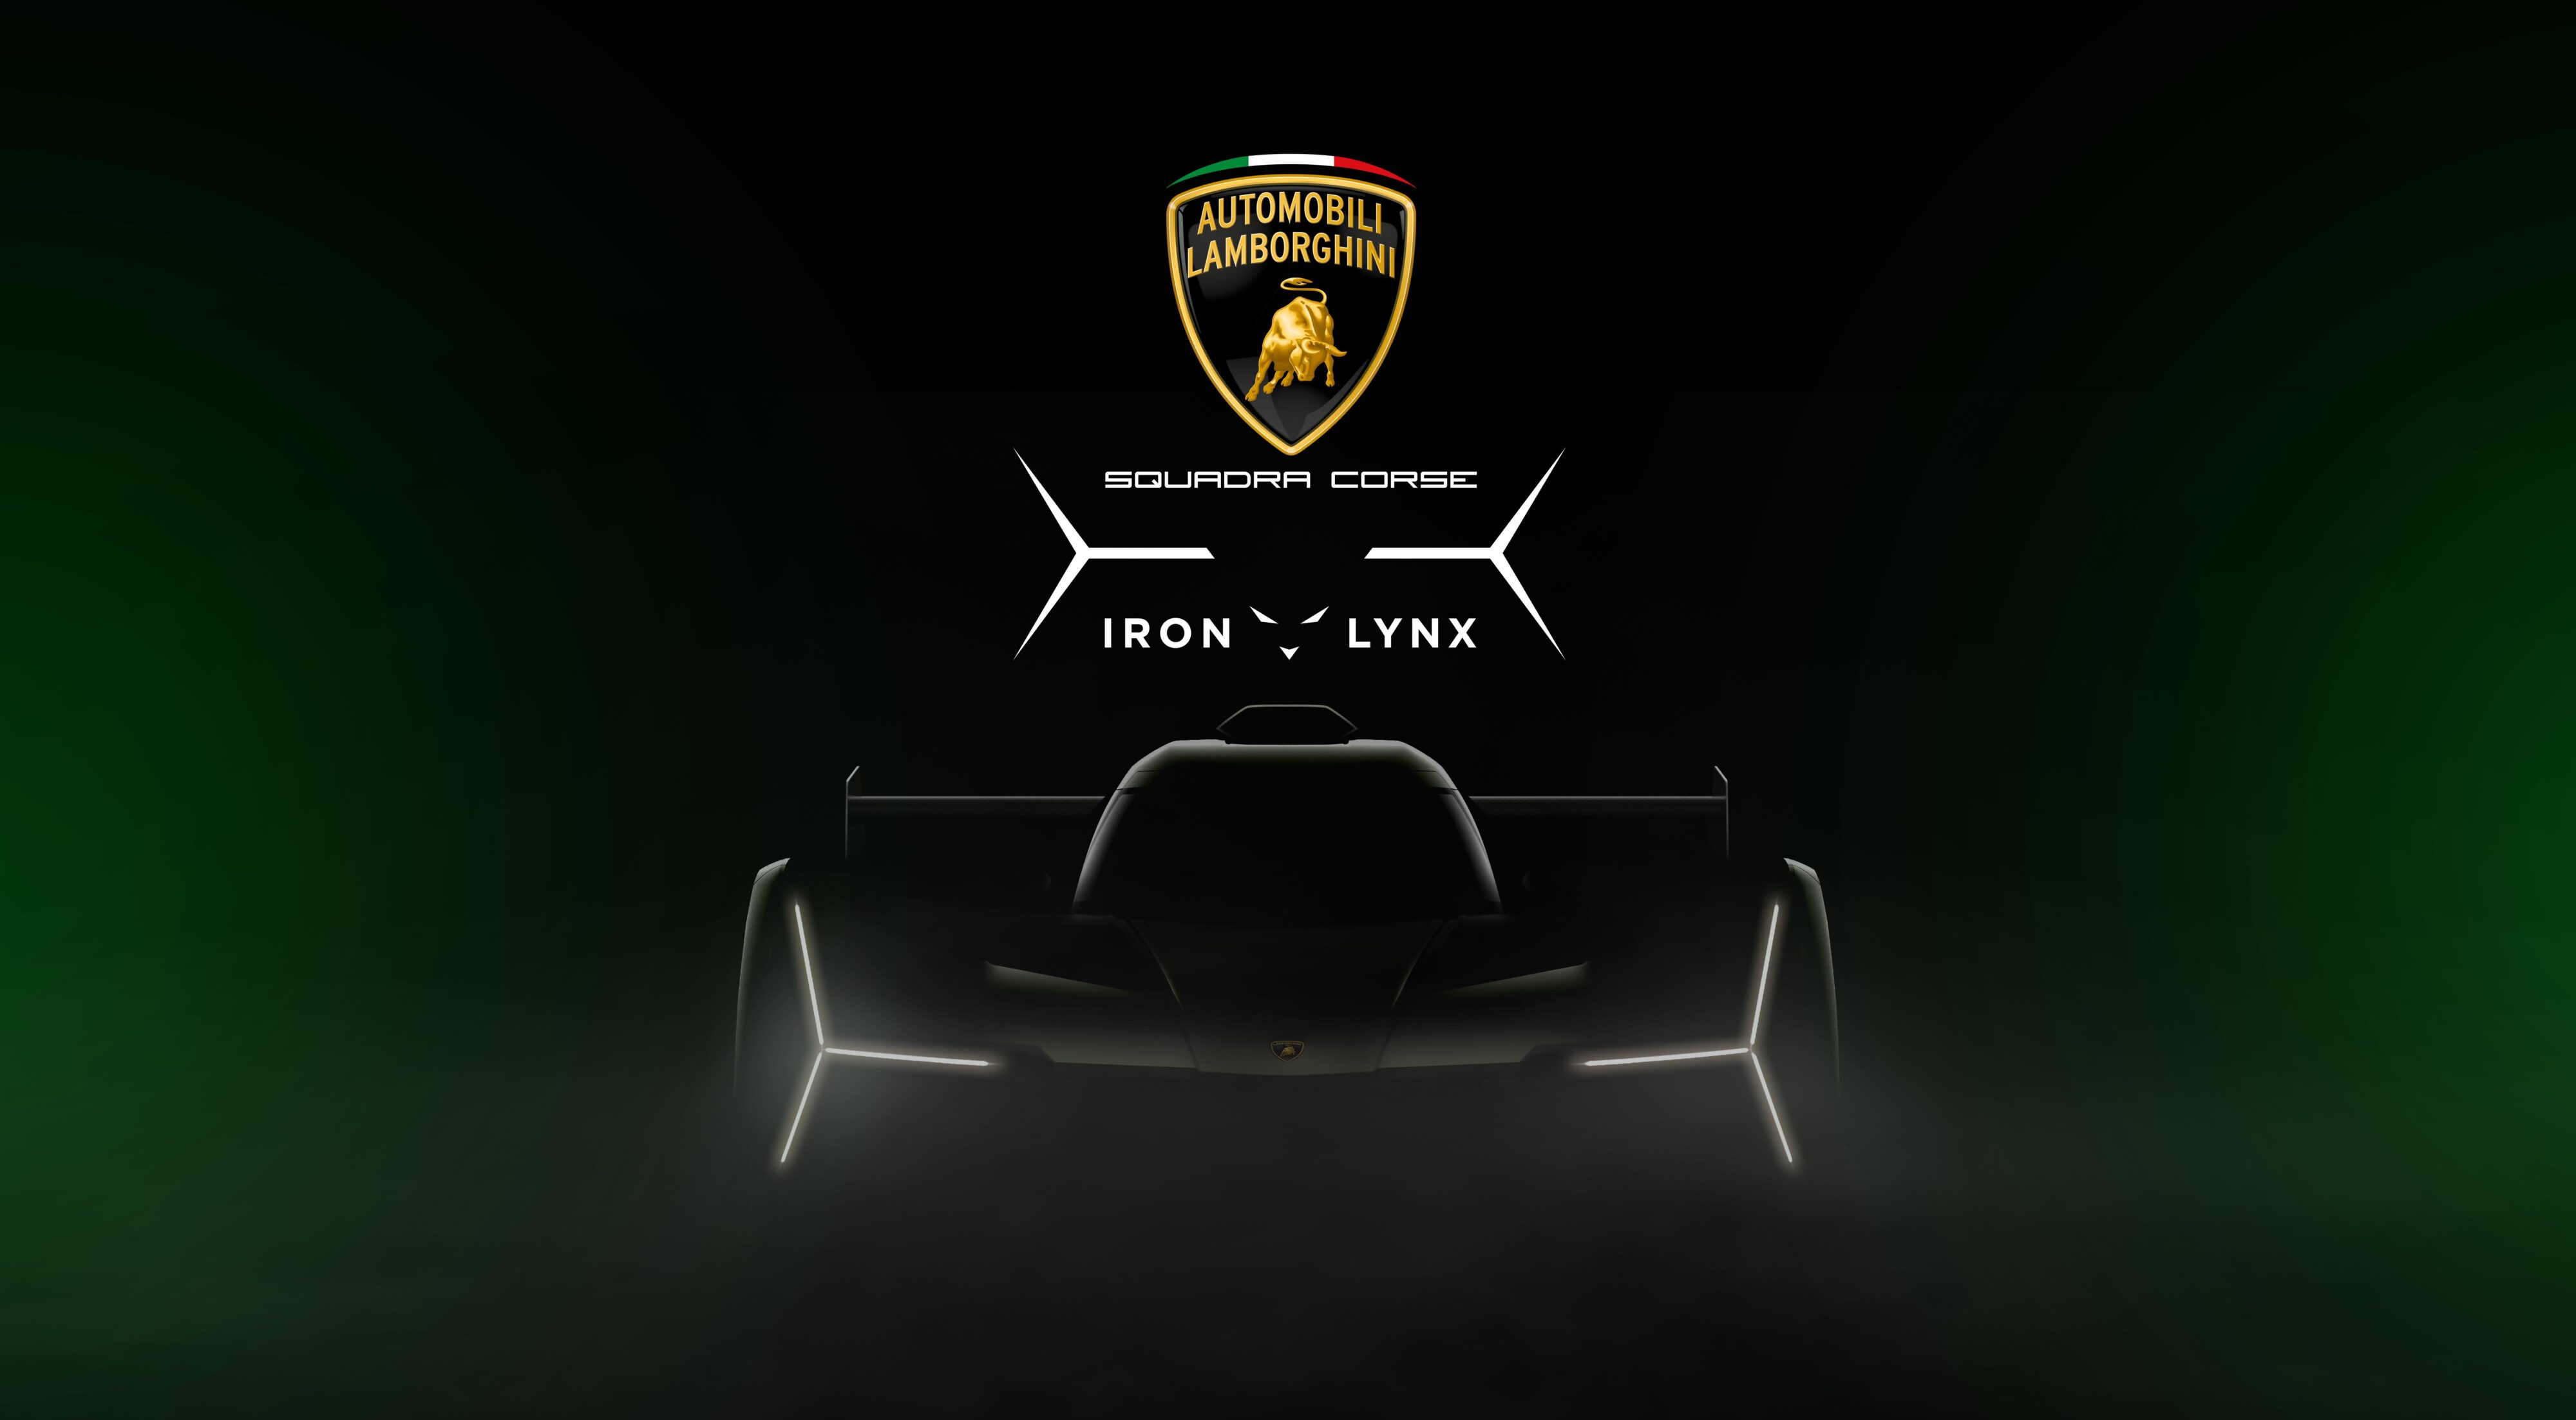 A teaser photo of the Lamborghini LMDh racecar